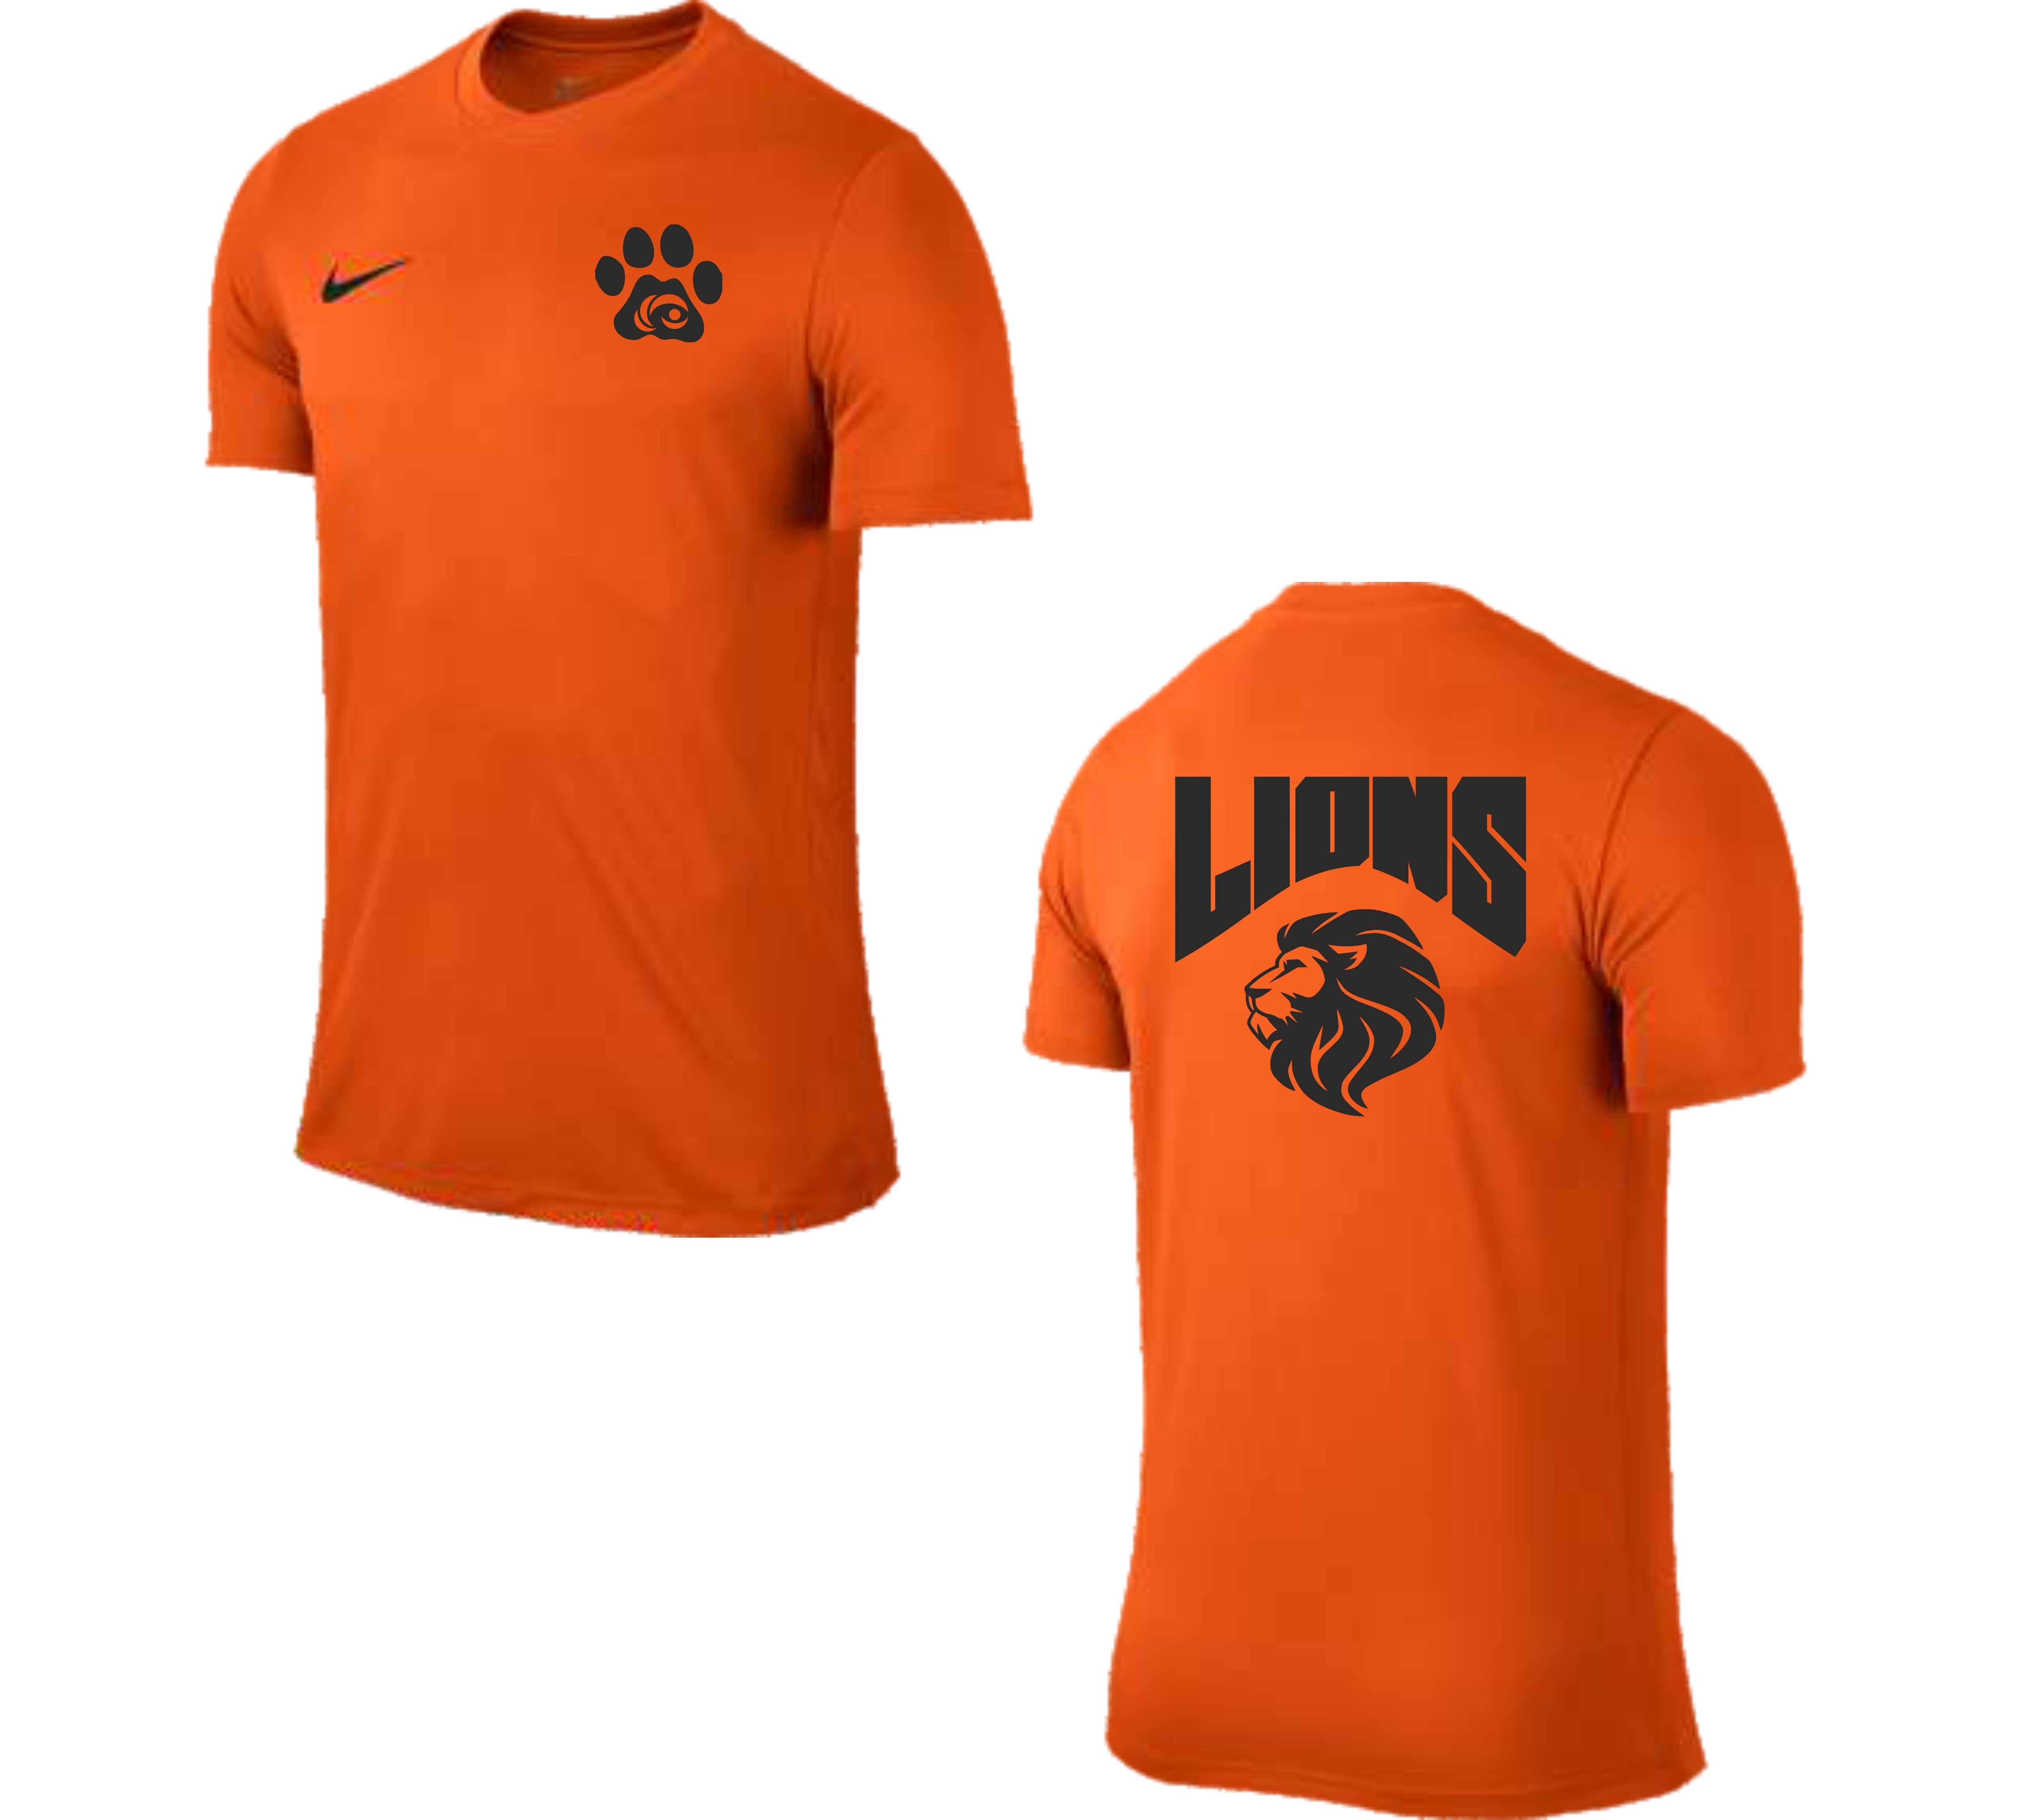 ISH PE shirt - lions